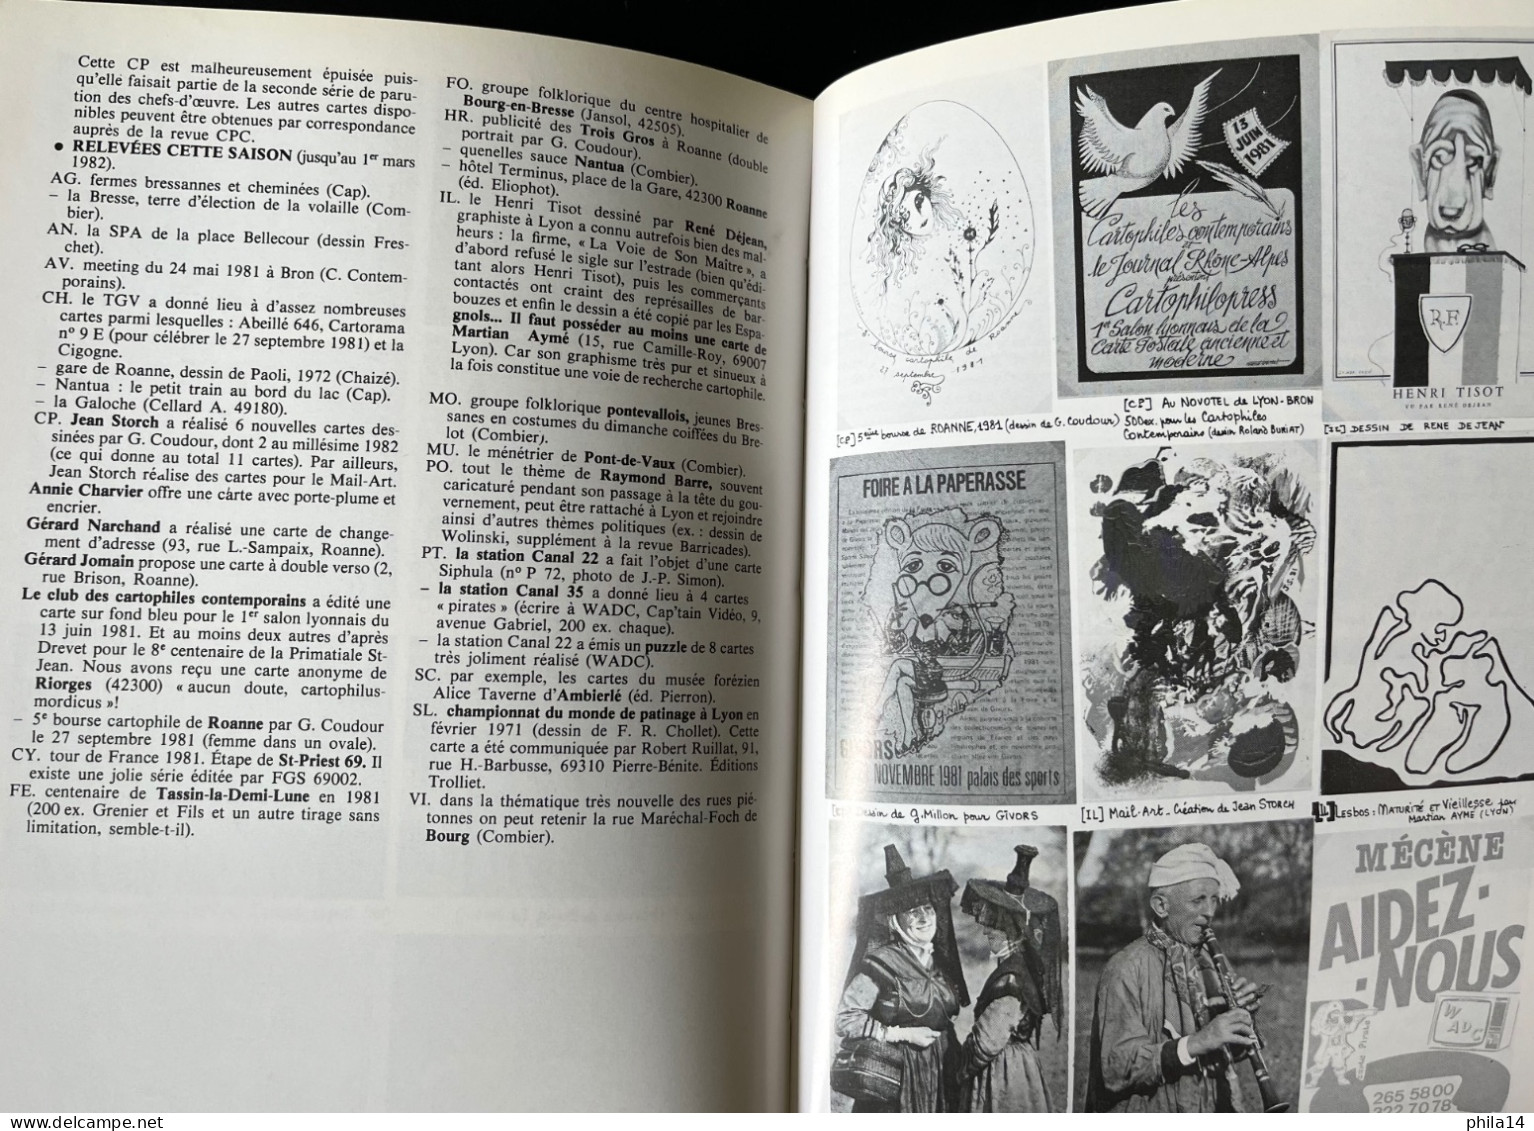 CATALOGUE NEUDIN LYONNAIS BEAUJOLAIS BRESSE FOREZ TOME 3 / 1982 / 192 PAGES - Boeken & Catalogi